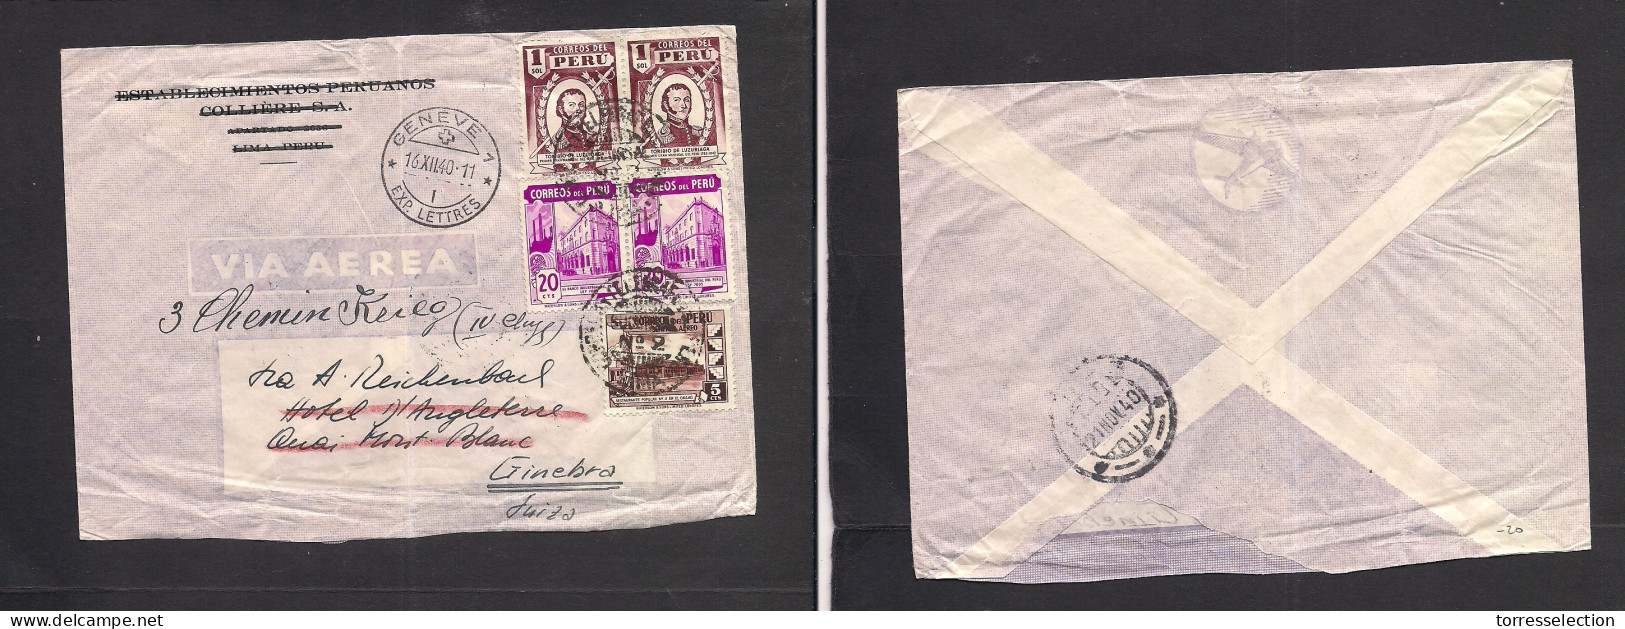 PERU. 1940. Lima Suc 2 - Switzerland, Geneva (16 Dec) Air Multifkd Envelope, Fwded 2,45 Soles Rate. XSALE. - Pérou